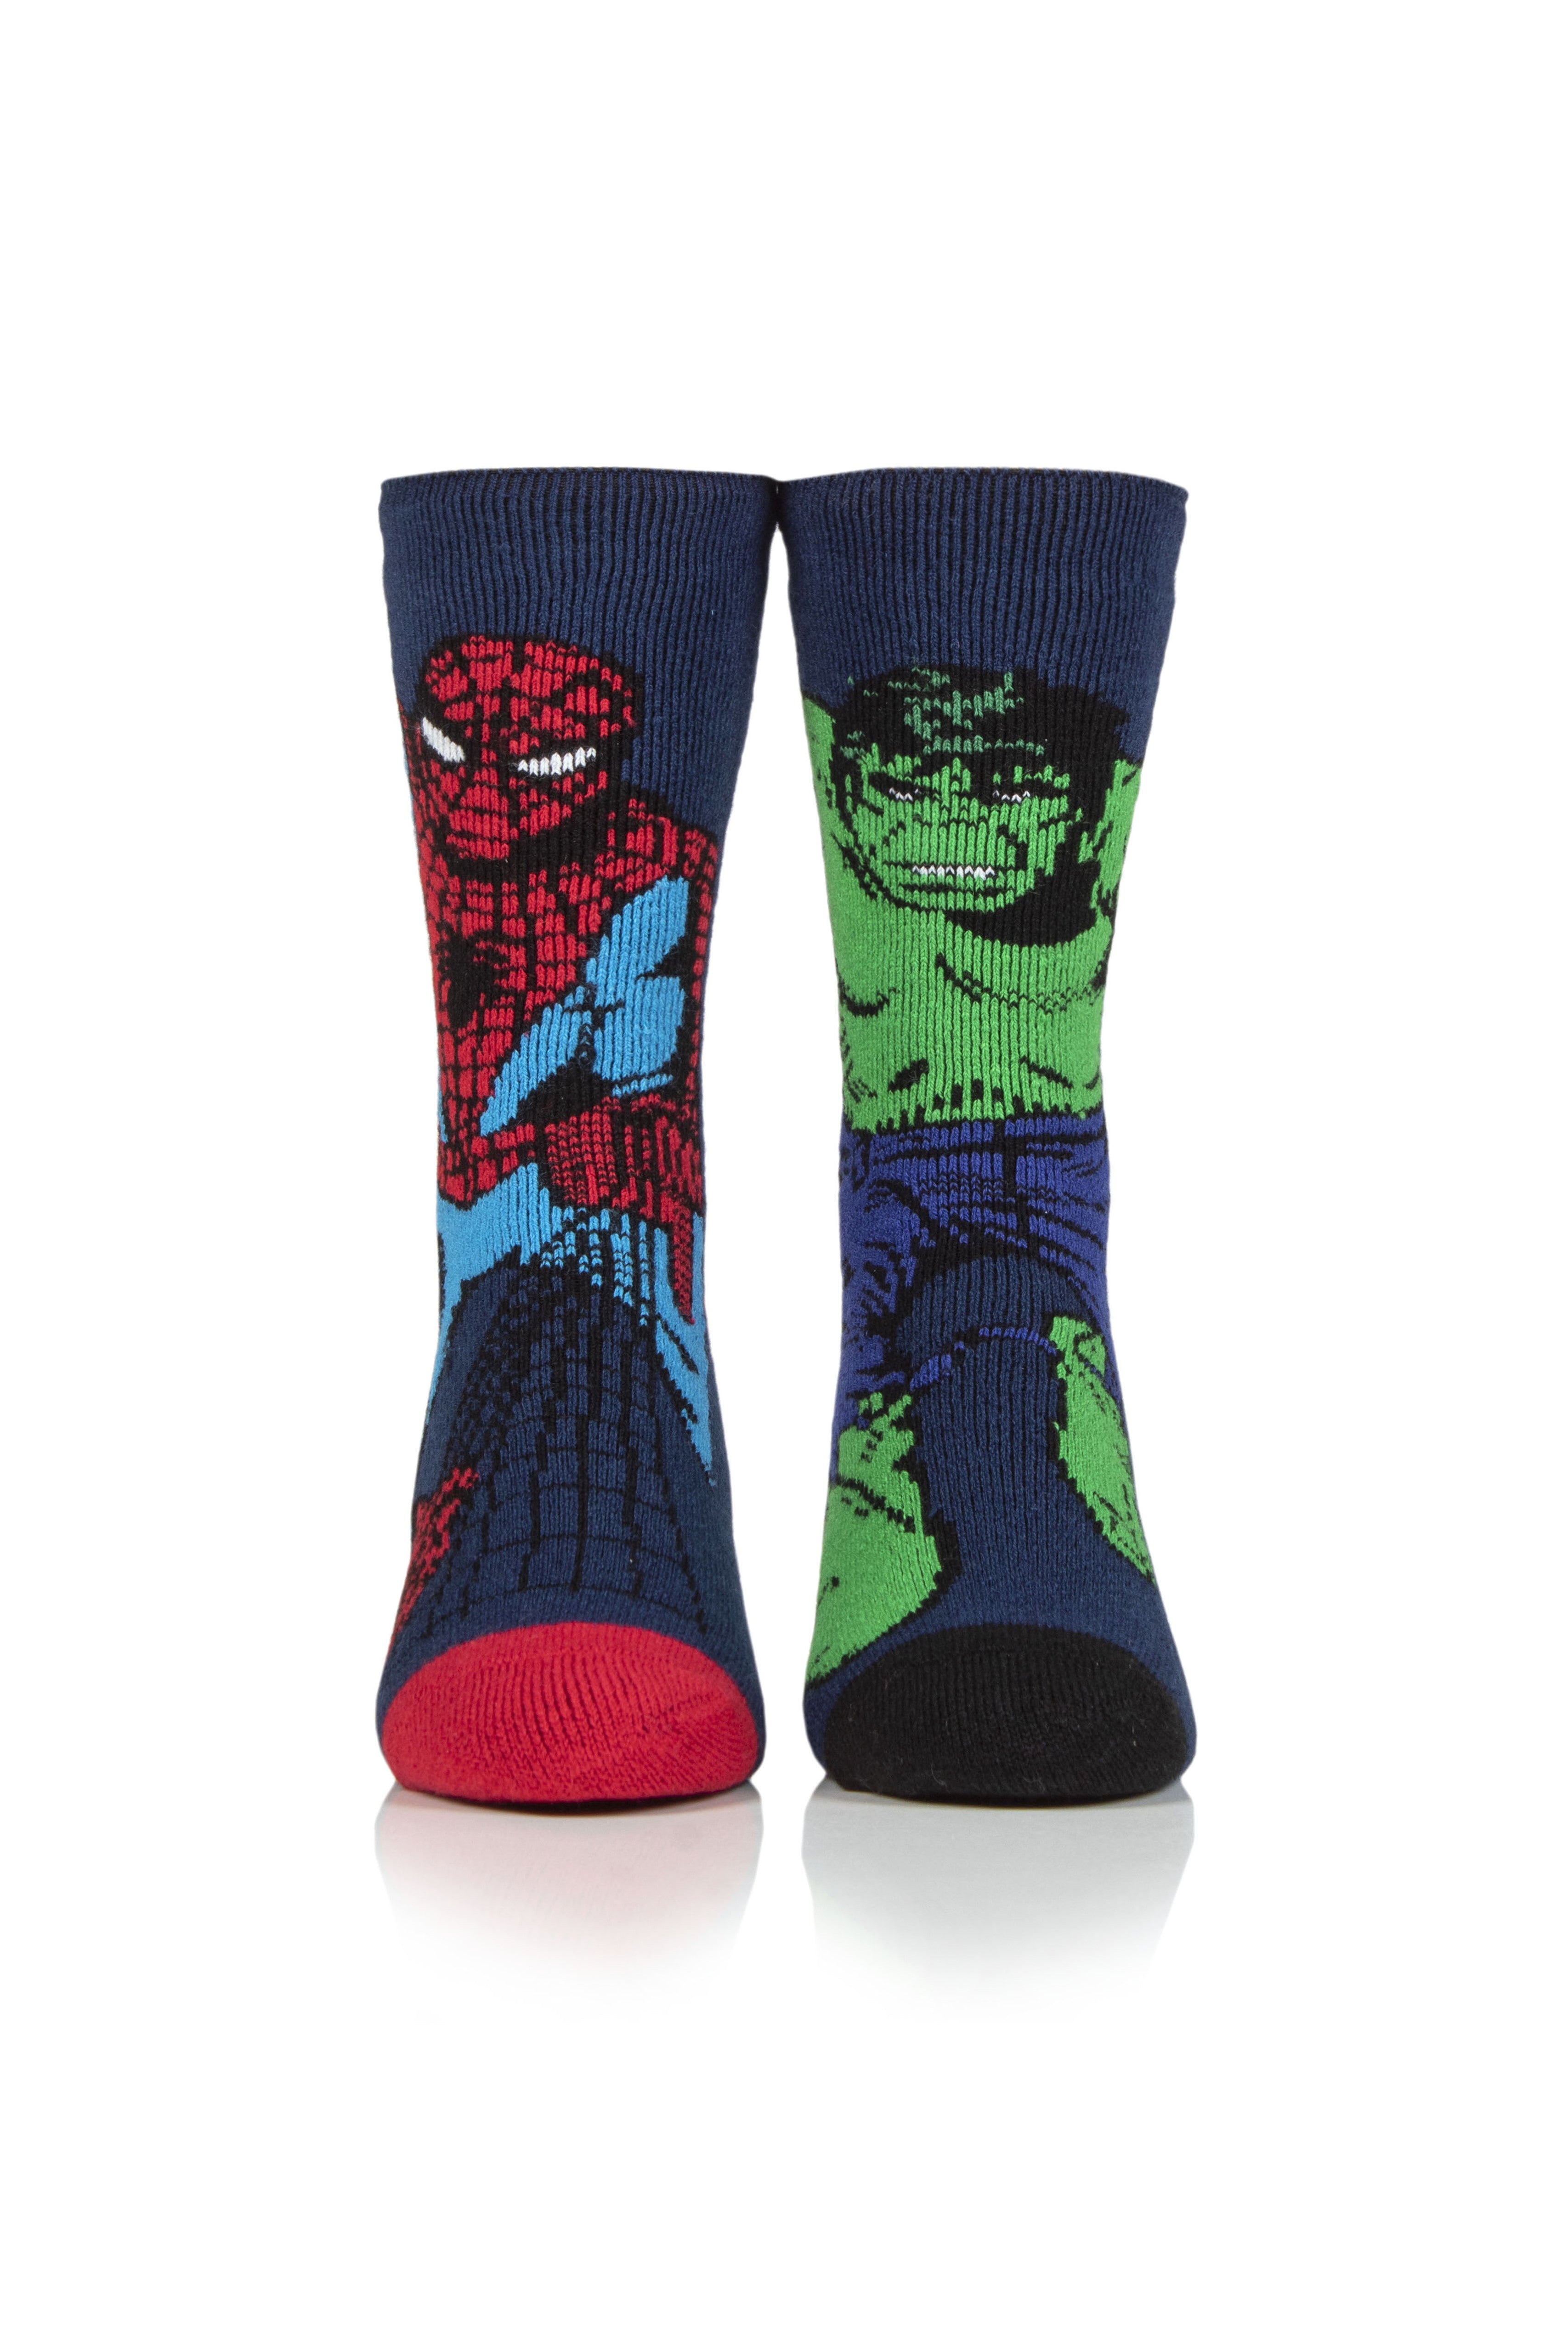 HEAT HOLDERS Lite Licensed Marvel Character Socks -Hulk and Spiderman-Kids